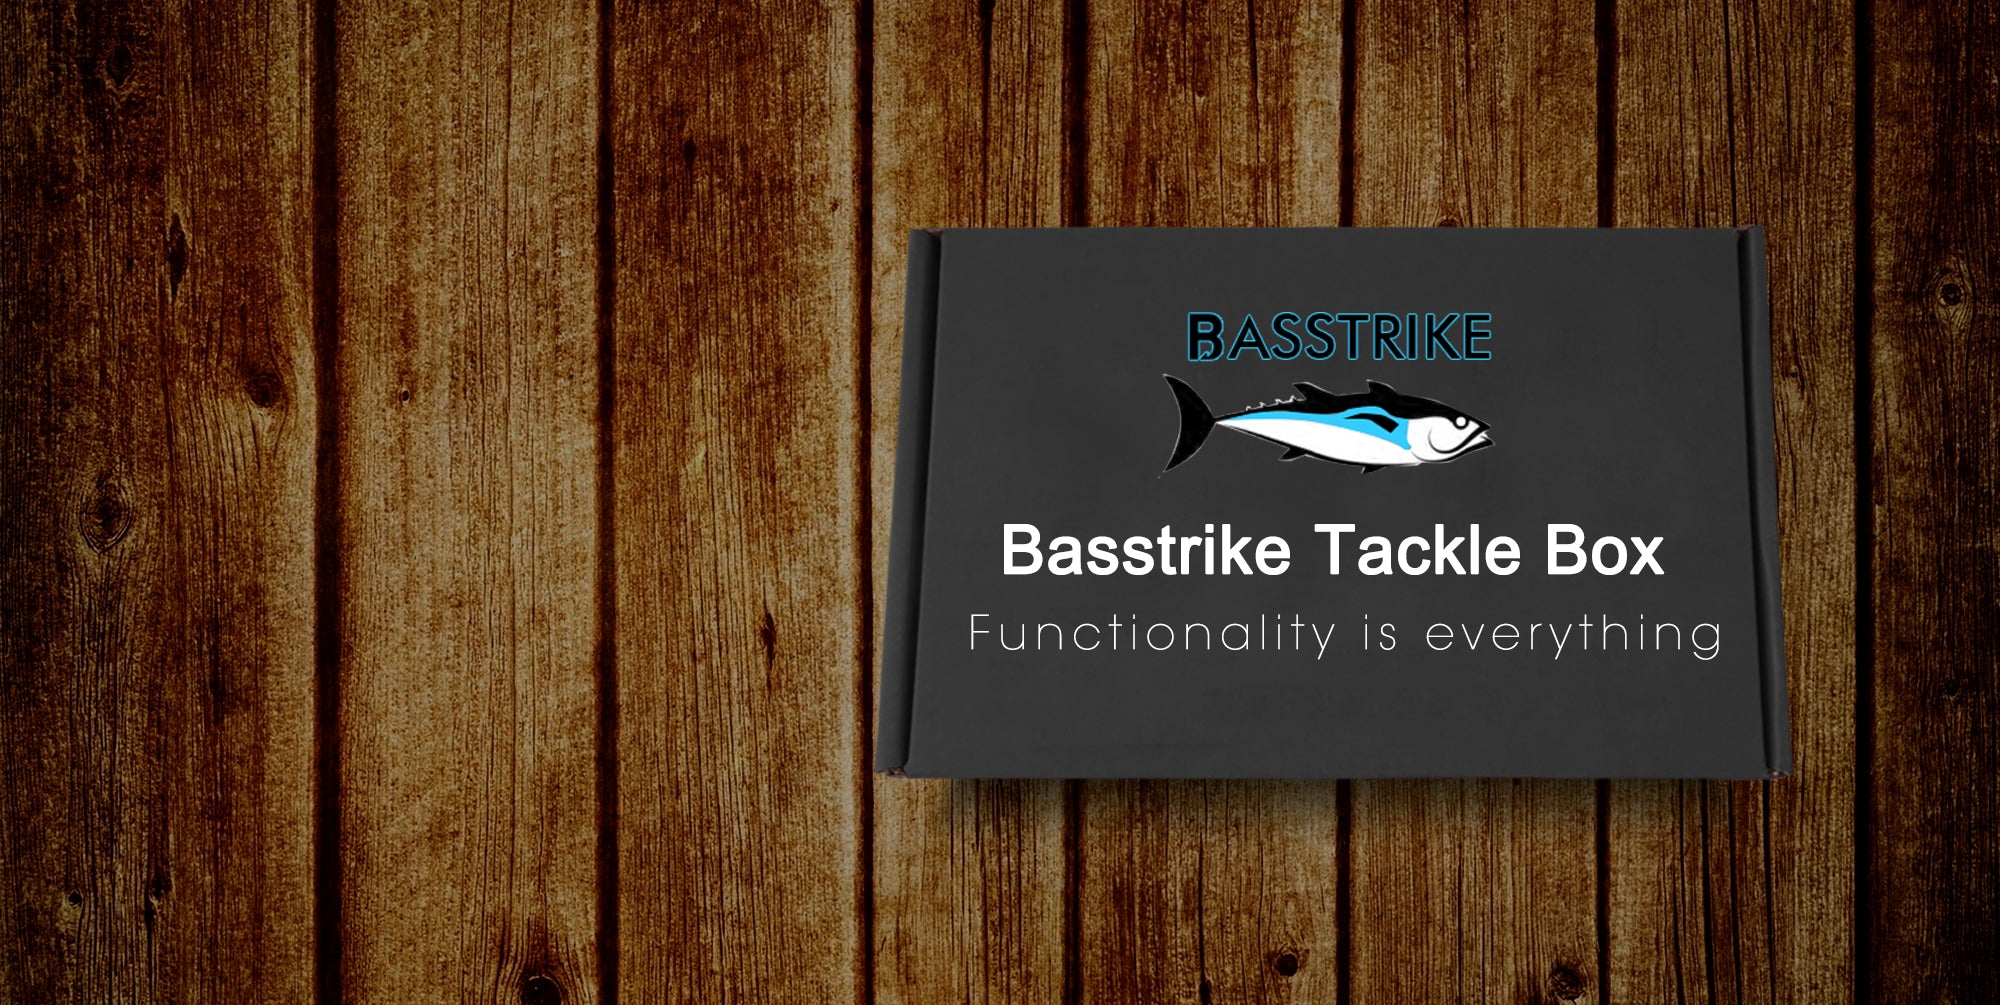 Basstrike Tackle Box